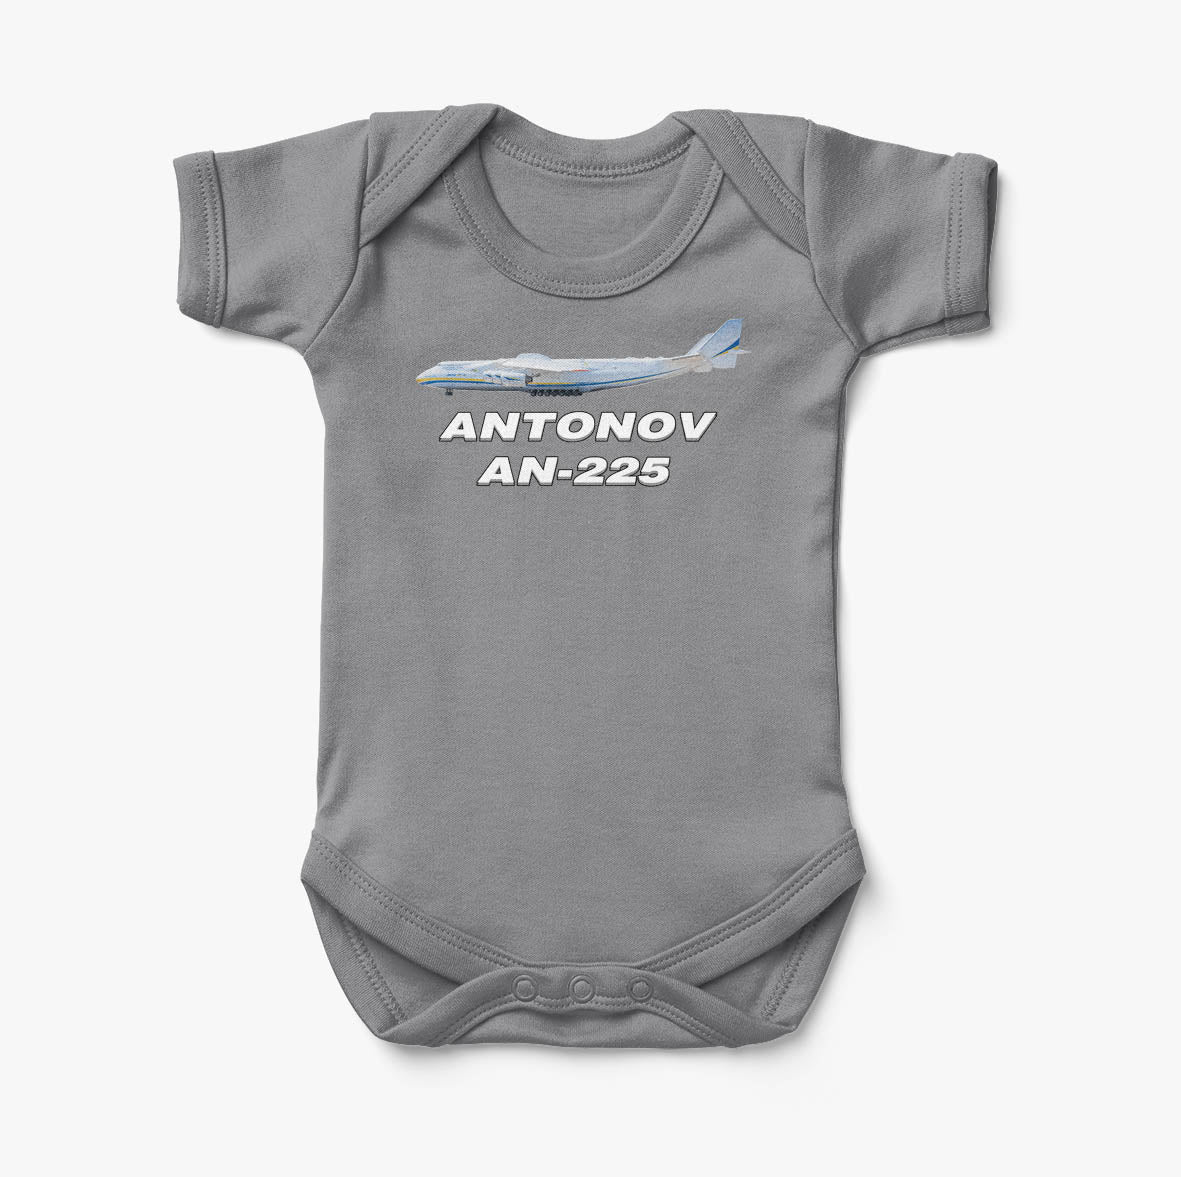 The Antonov AN-225 Designed Baby Bodysuits